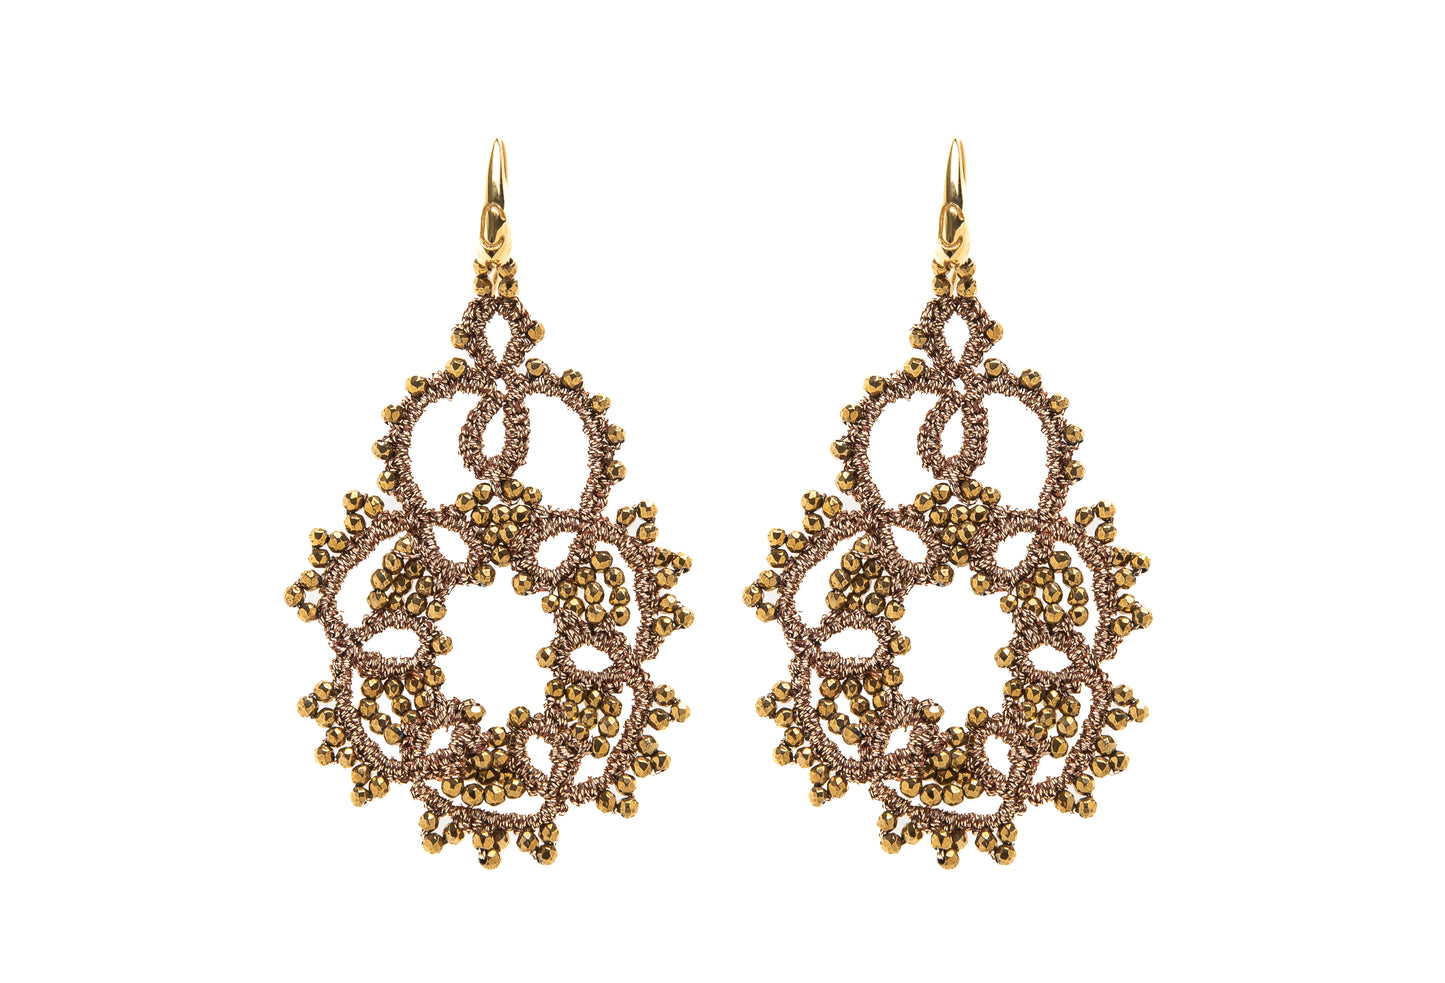 Agatha lace earrings, gold